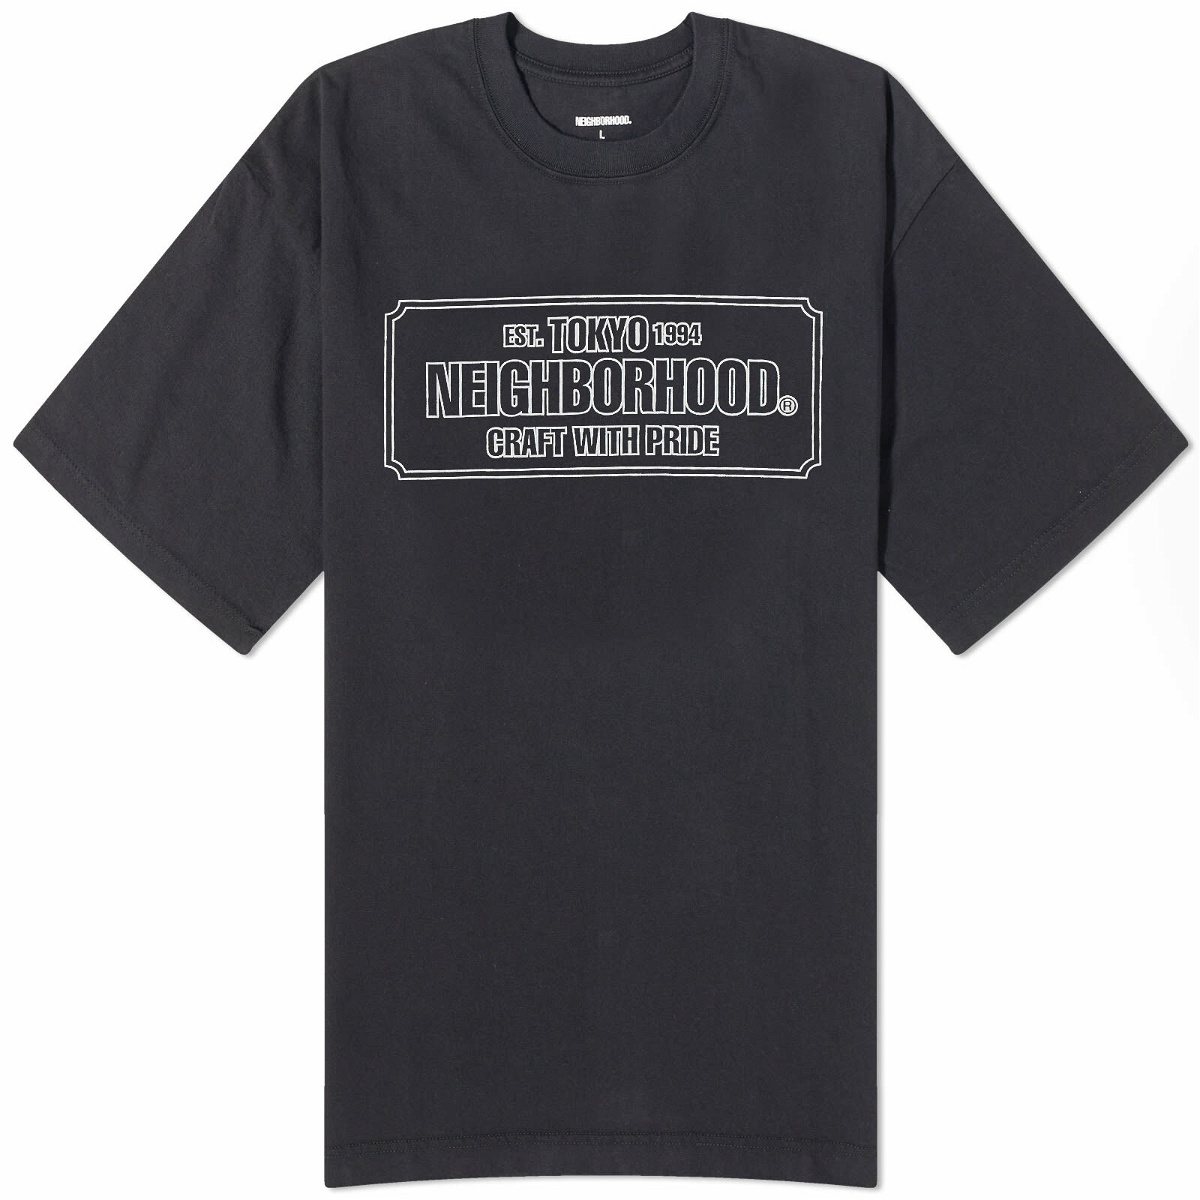 Neighborhood Men's SS-1 T-Shirt in Black Neighborhood